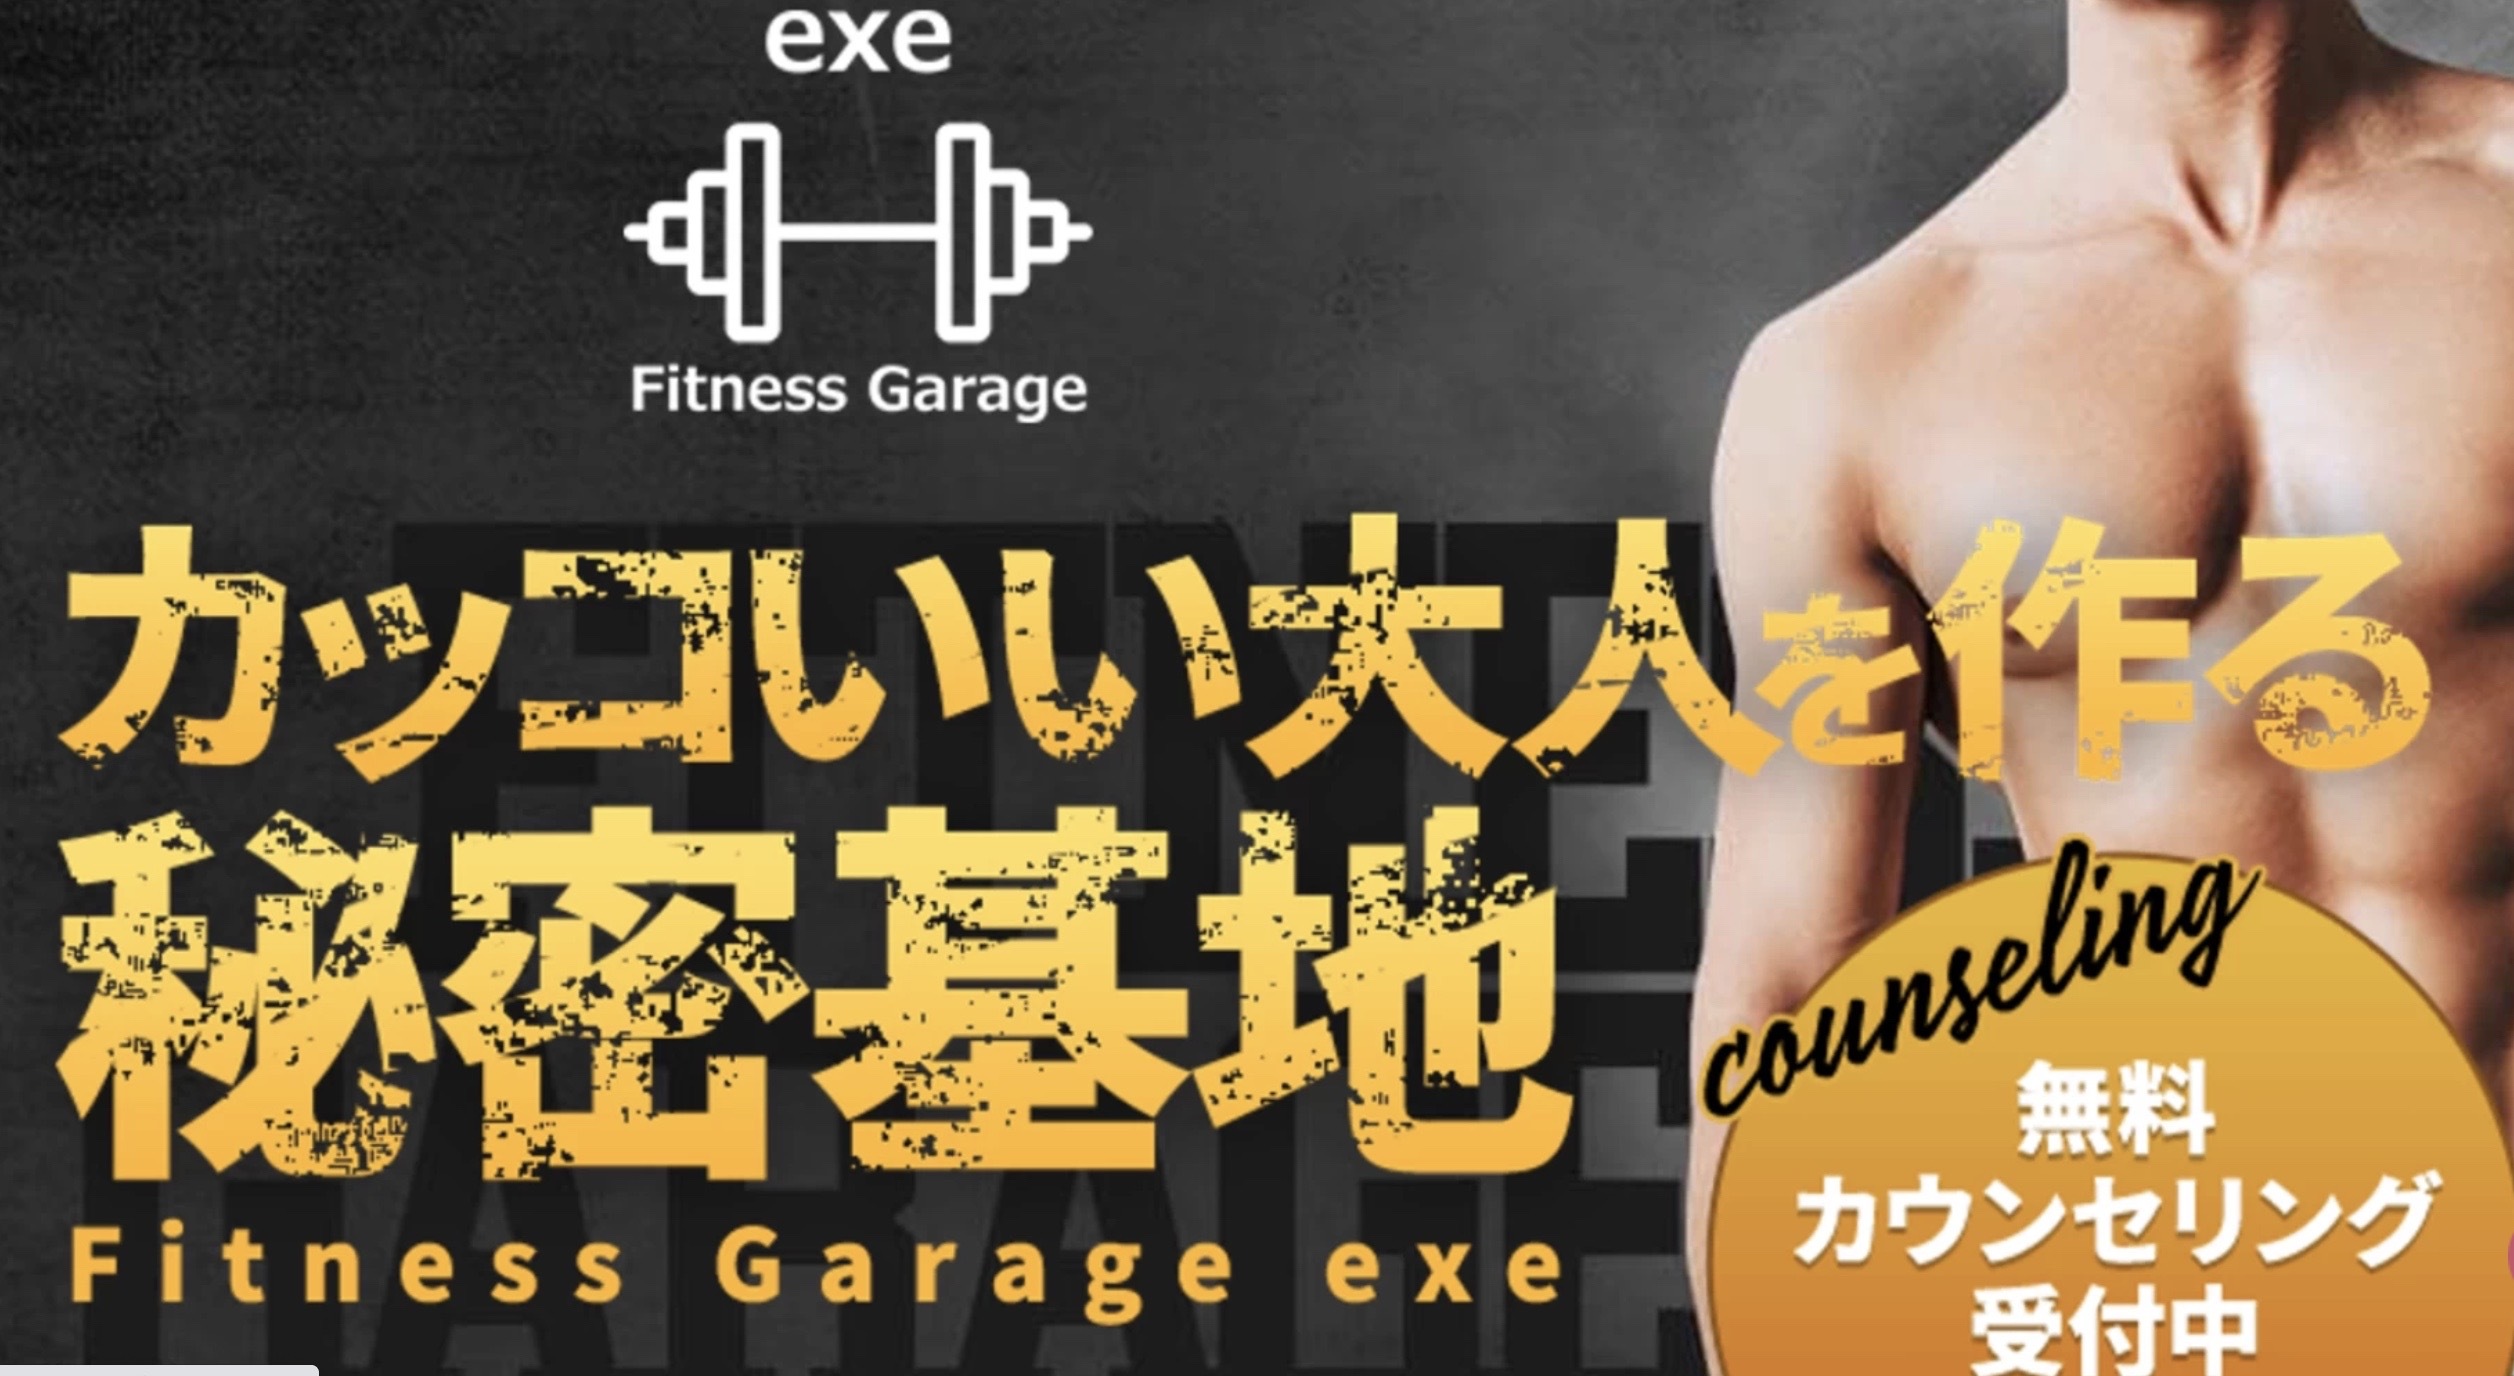 11.Fitness Garage exe